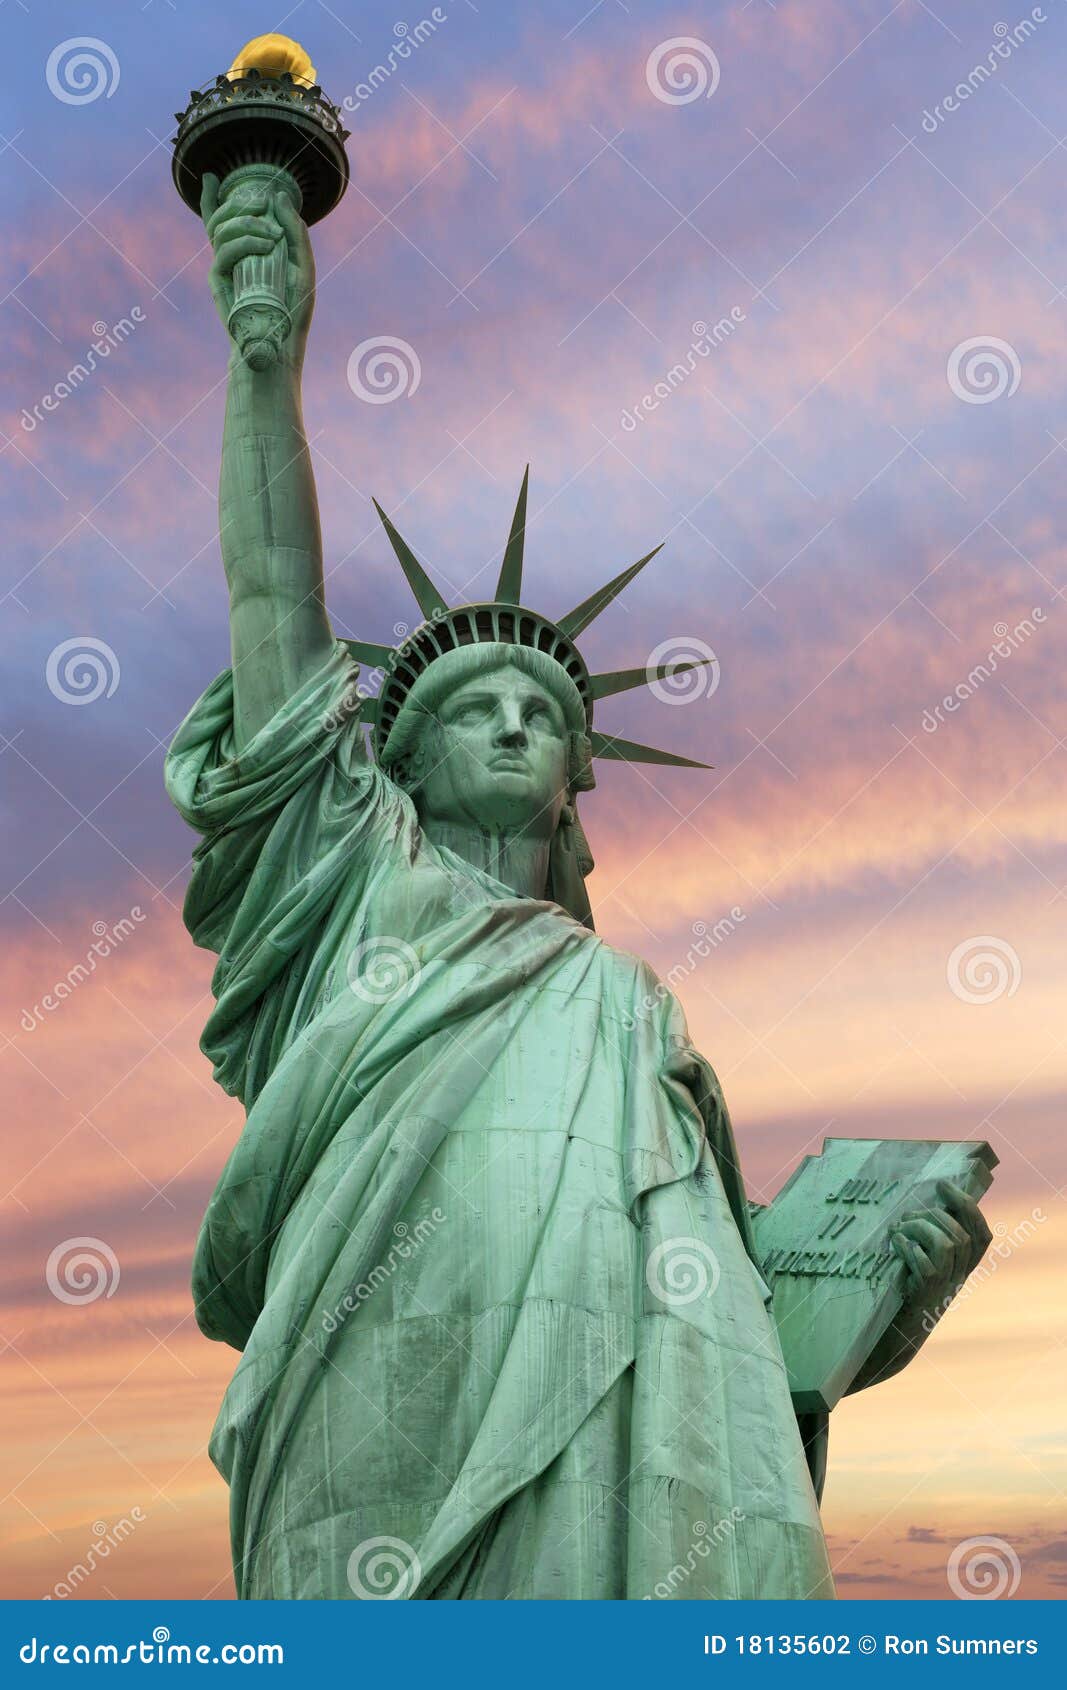 statue of liberty under a vivid sky